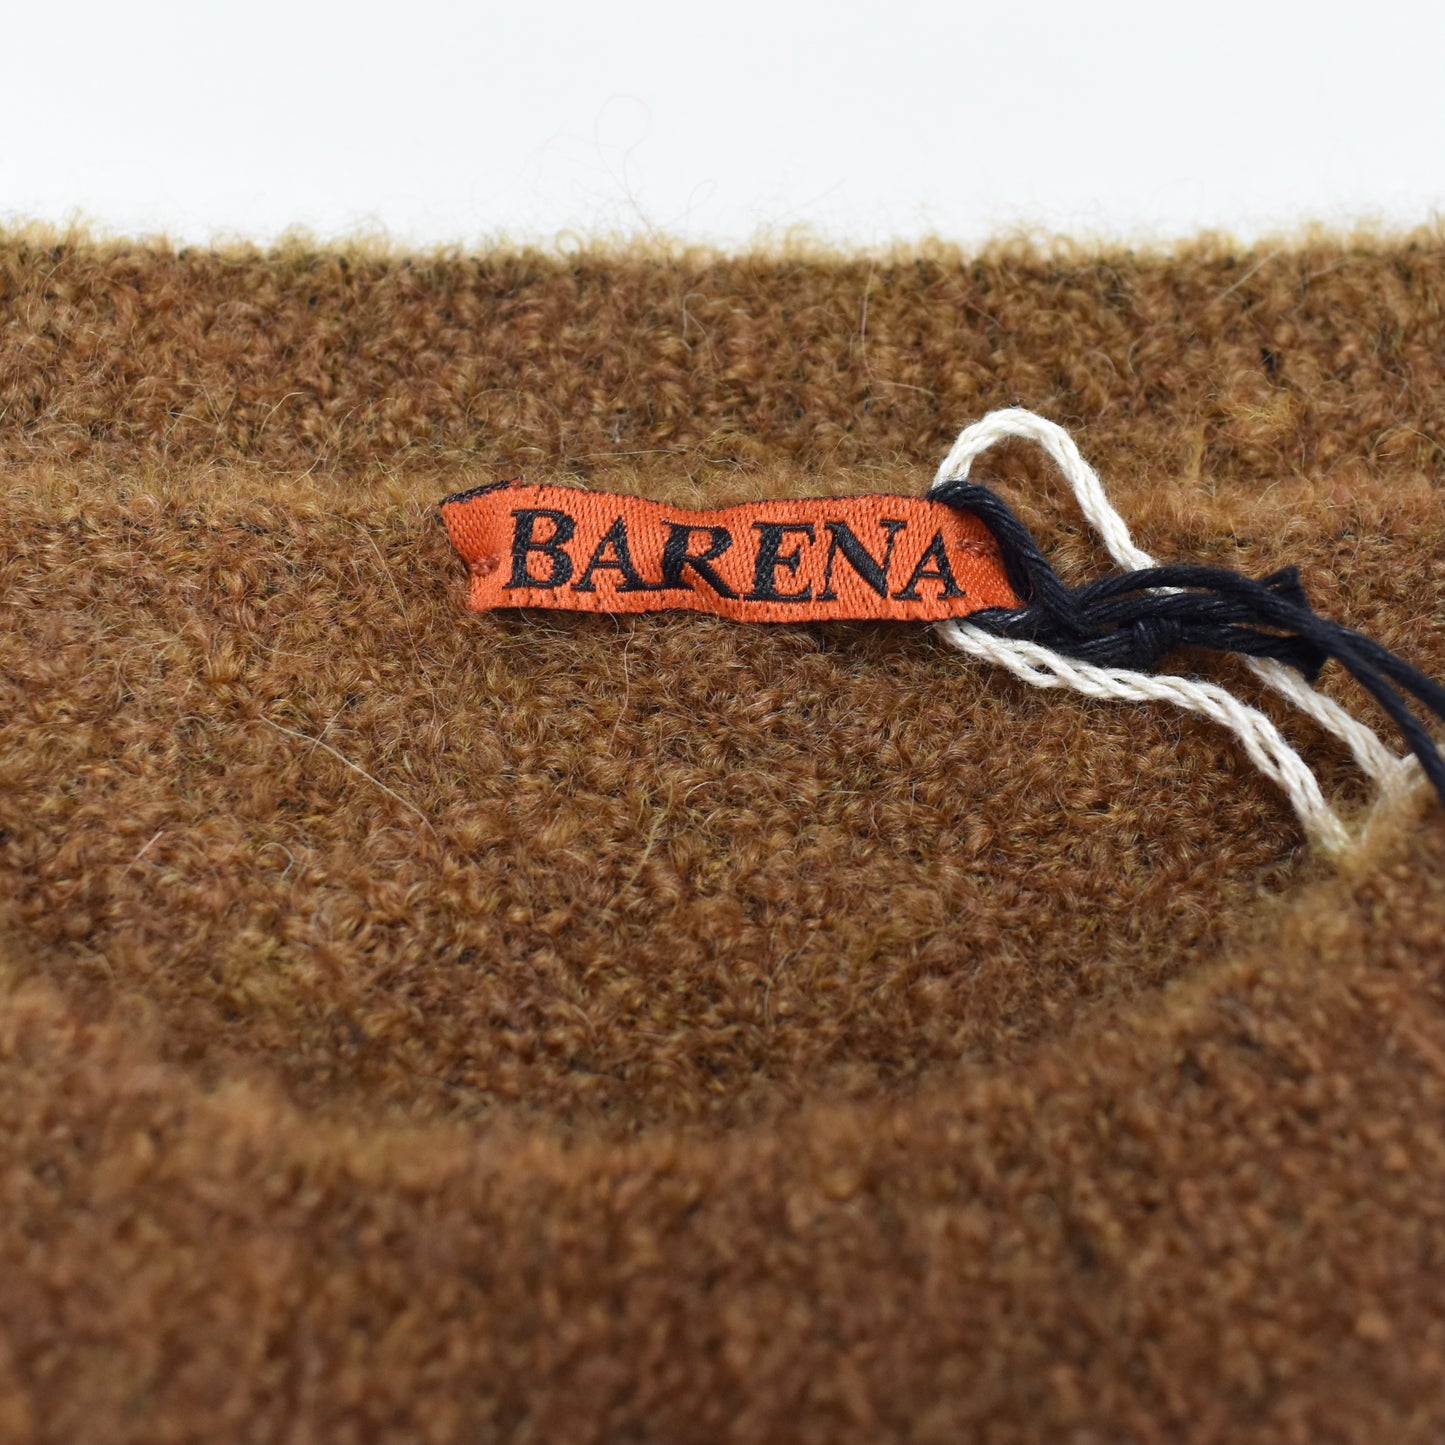 Barena - Brown Brushed Wool Crewneck Sweater